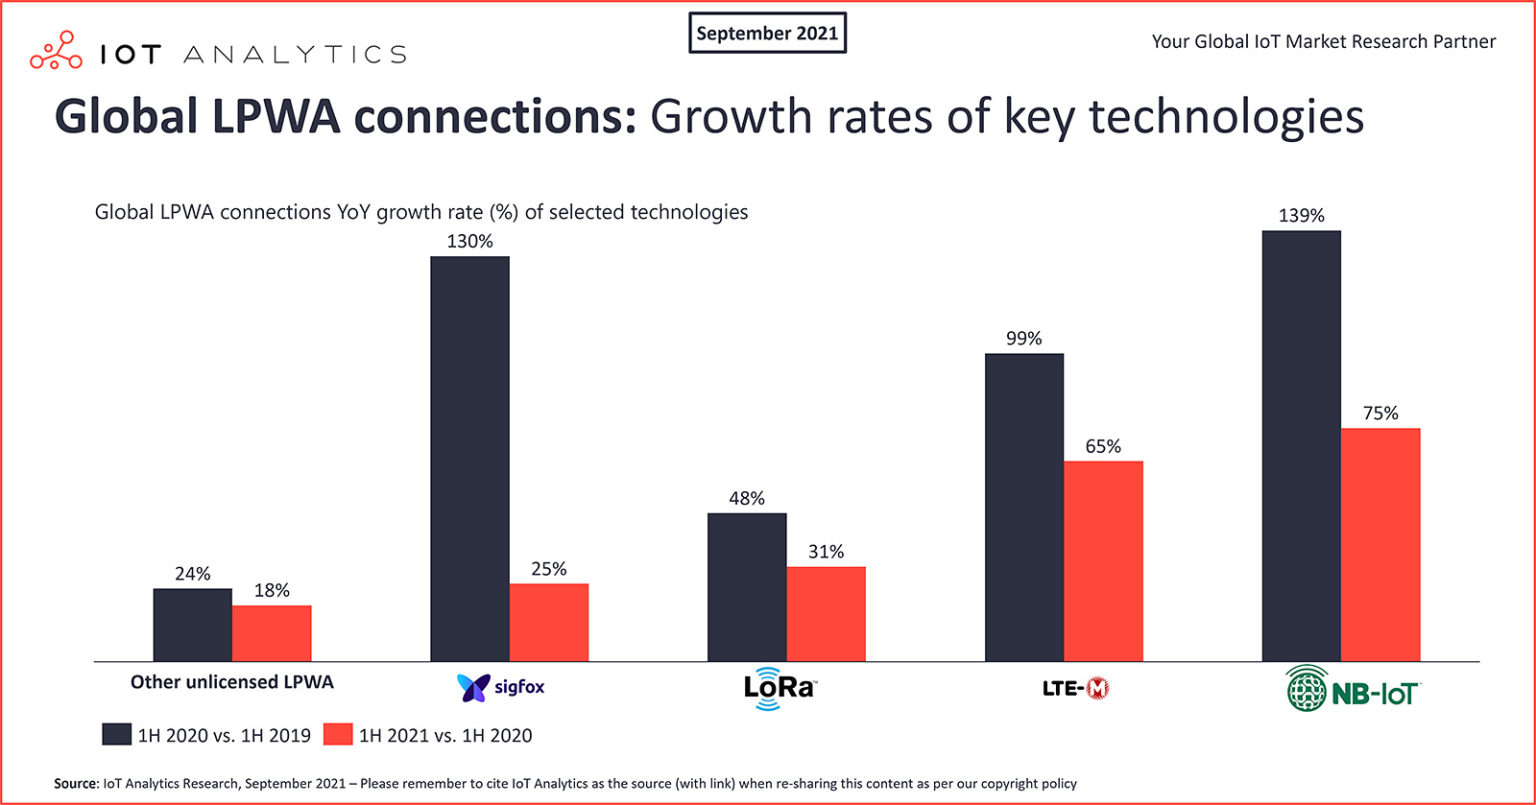 Global-lpwa-connections-growth-rates-of-key-technologies-min-1536x805.jpg (106 KB)